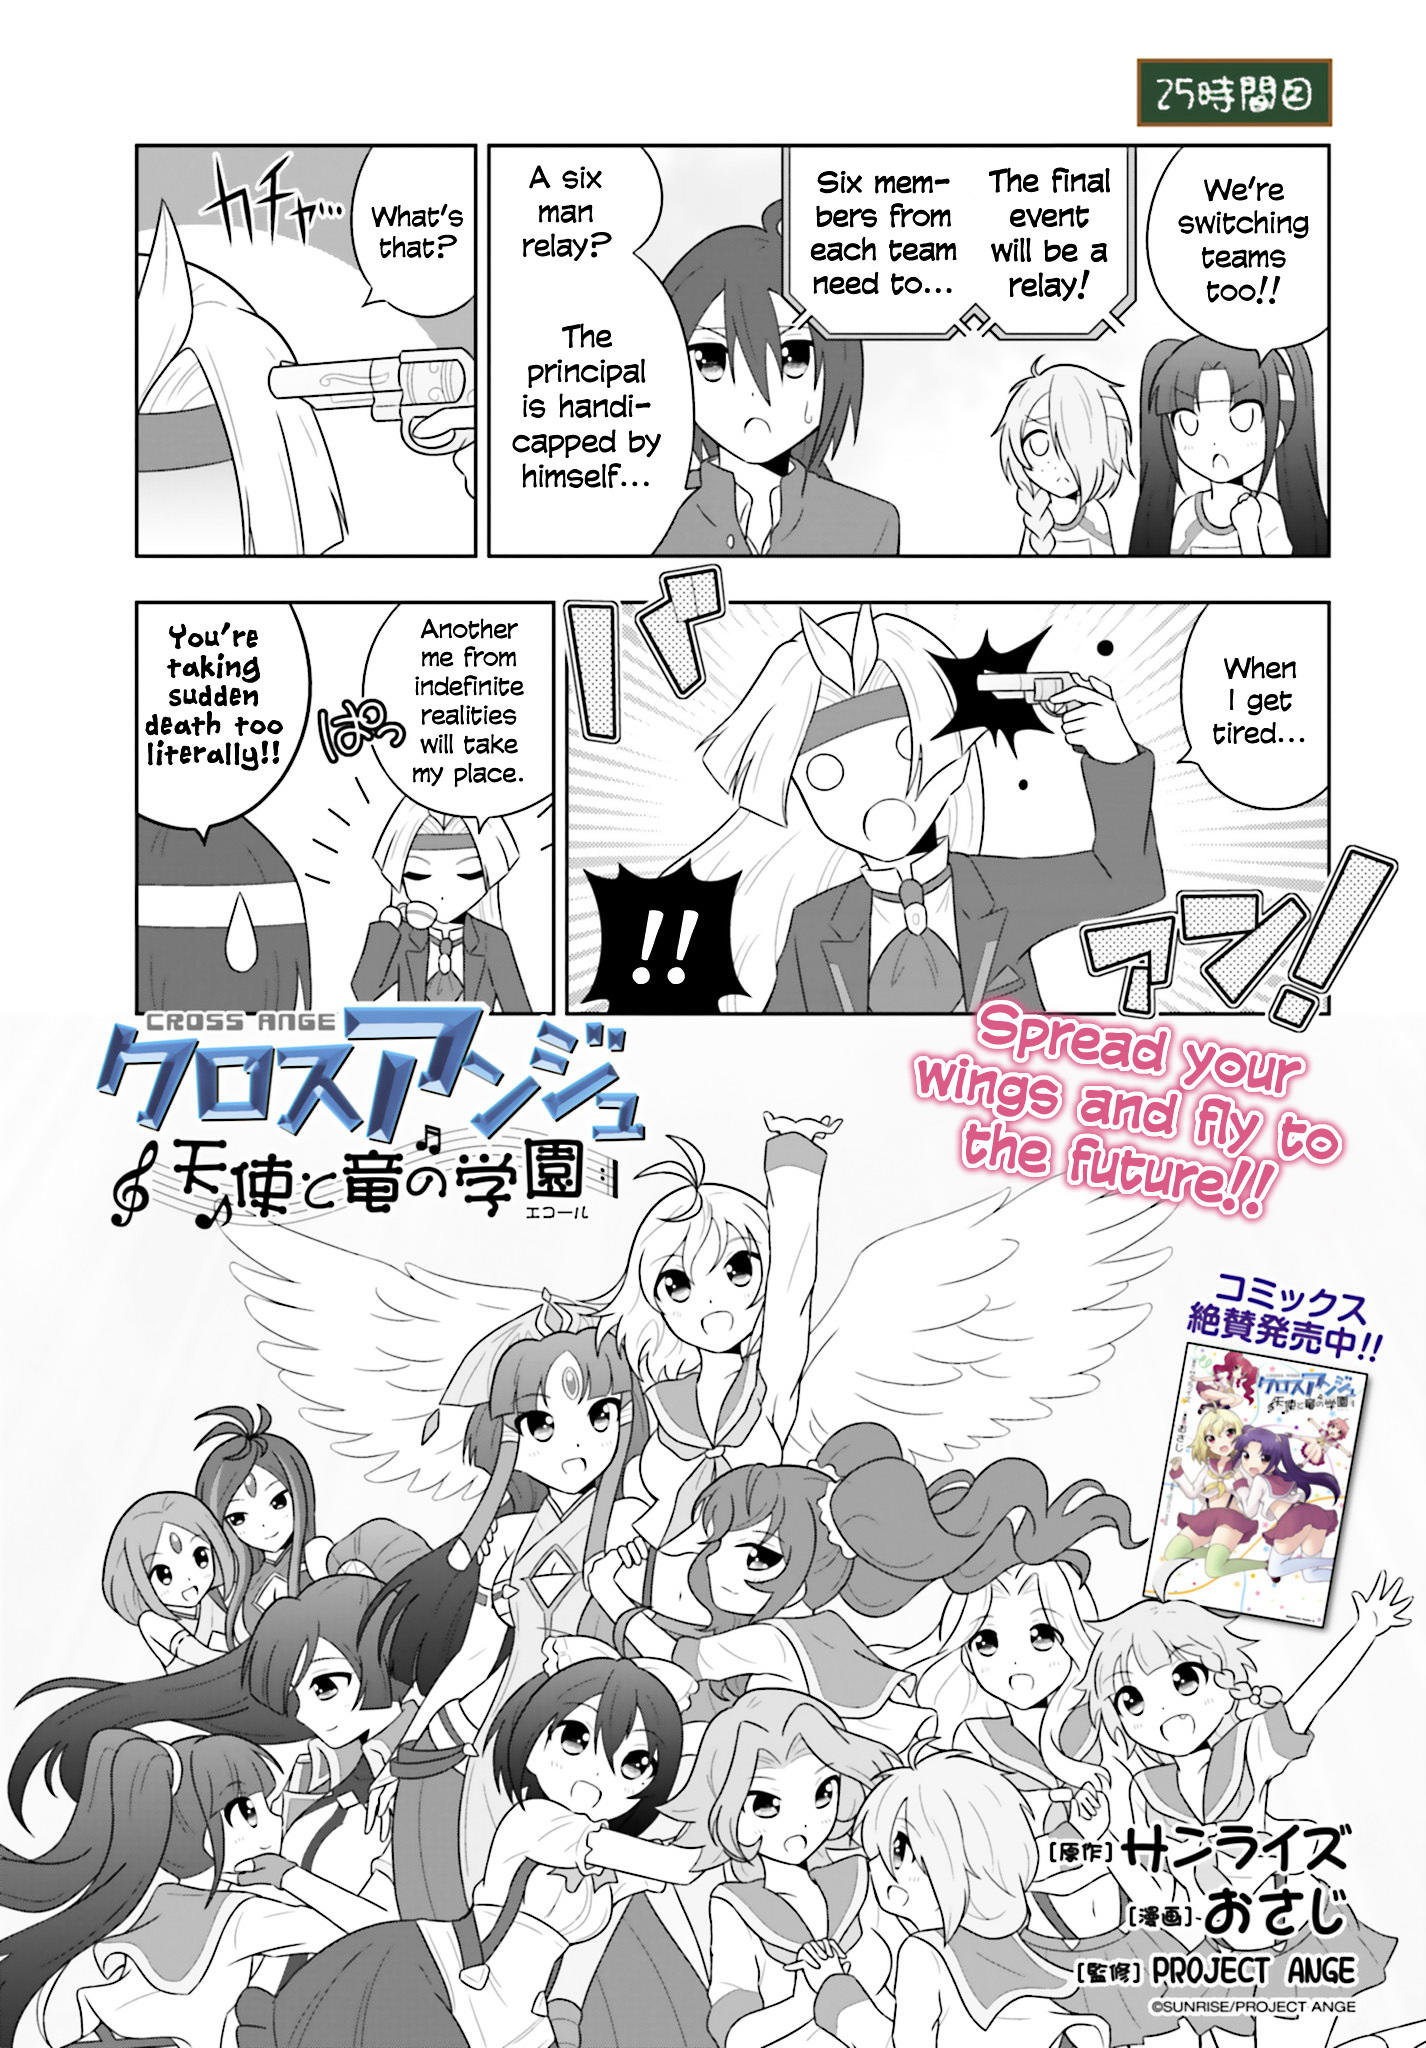 Read Cross Ange - Tenshi To Ryuu No Gakuen Chapter 1 on Mangakakalot